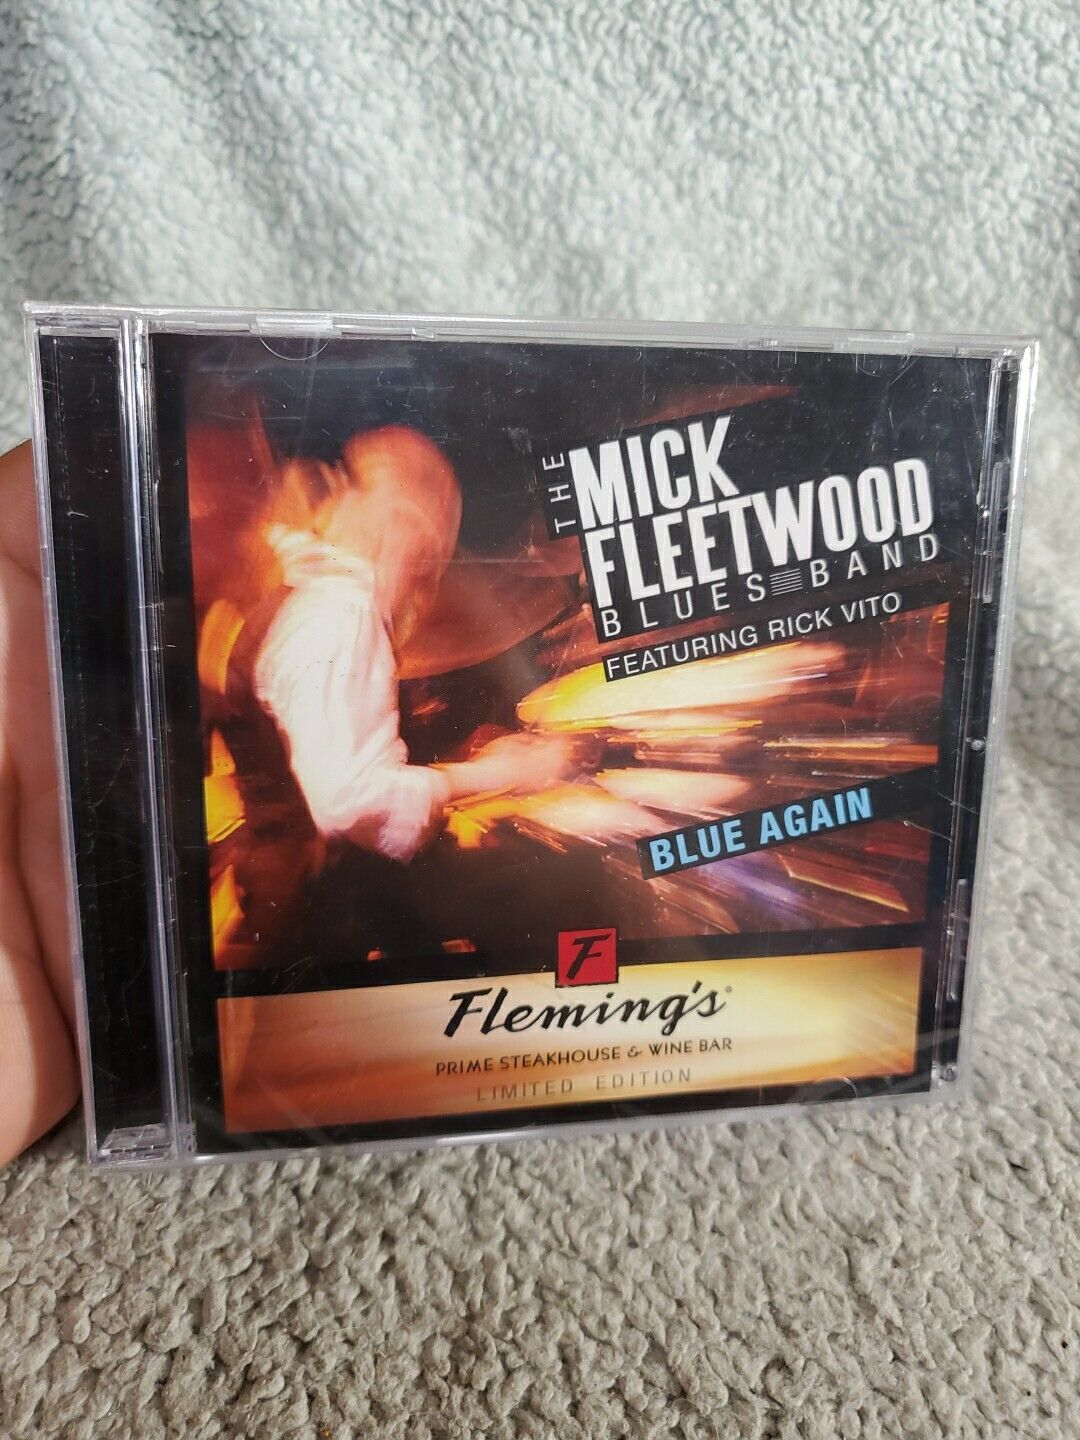 MICK FLEETWOOD BLUES BAND - BLUE AGAIN - TALLMAN - 2009 CD NEW SEALED 